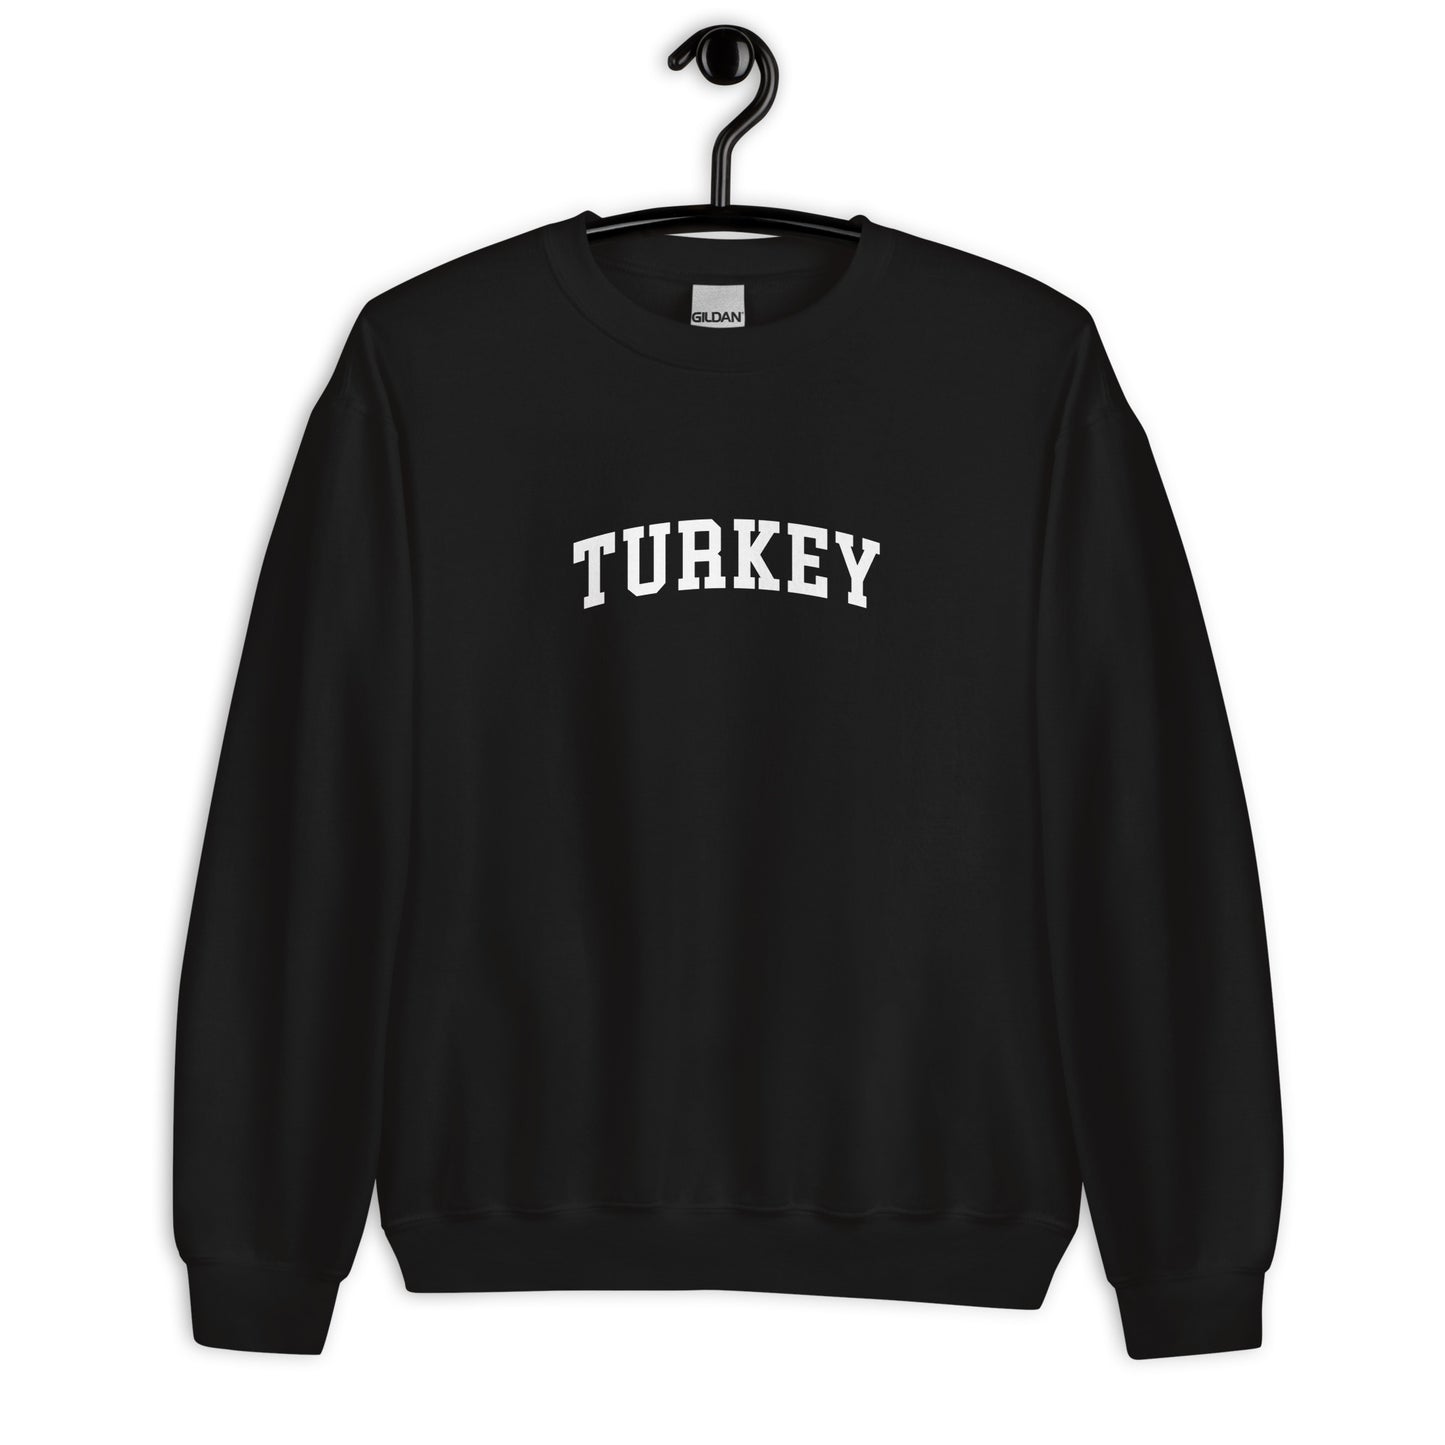 Turkey Sweatshirt - Arched Font